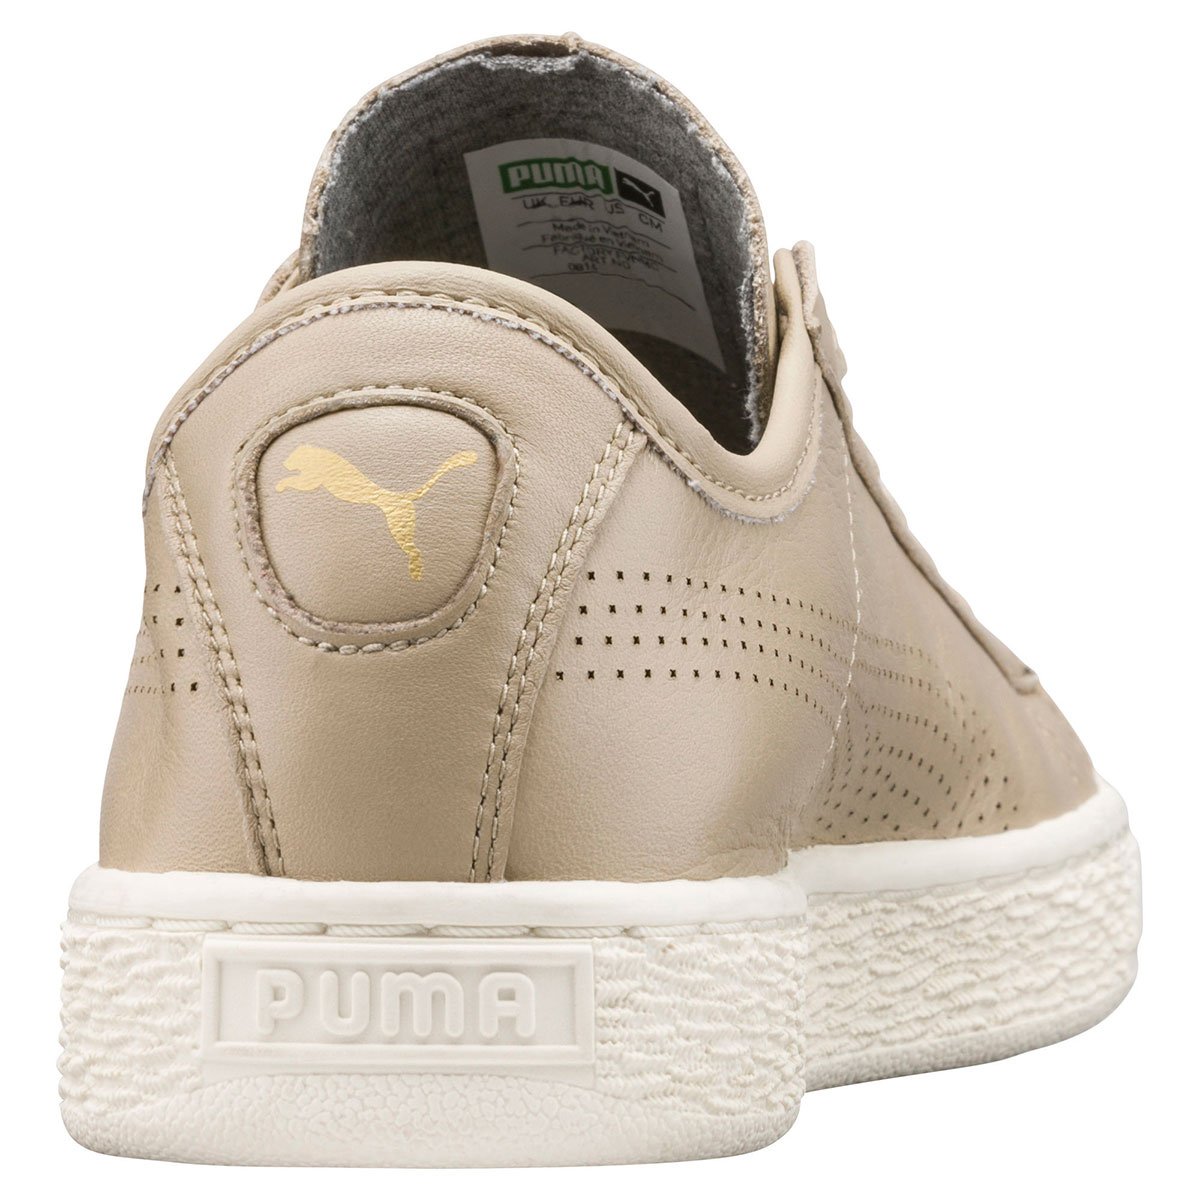 Puma Basket Classic Soft beige  363824-05